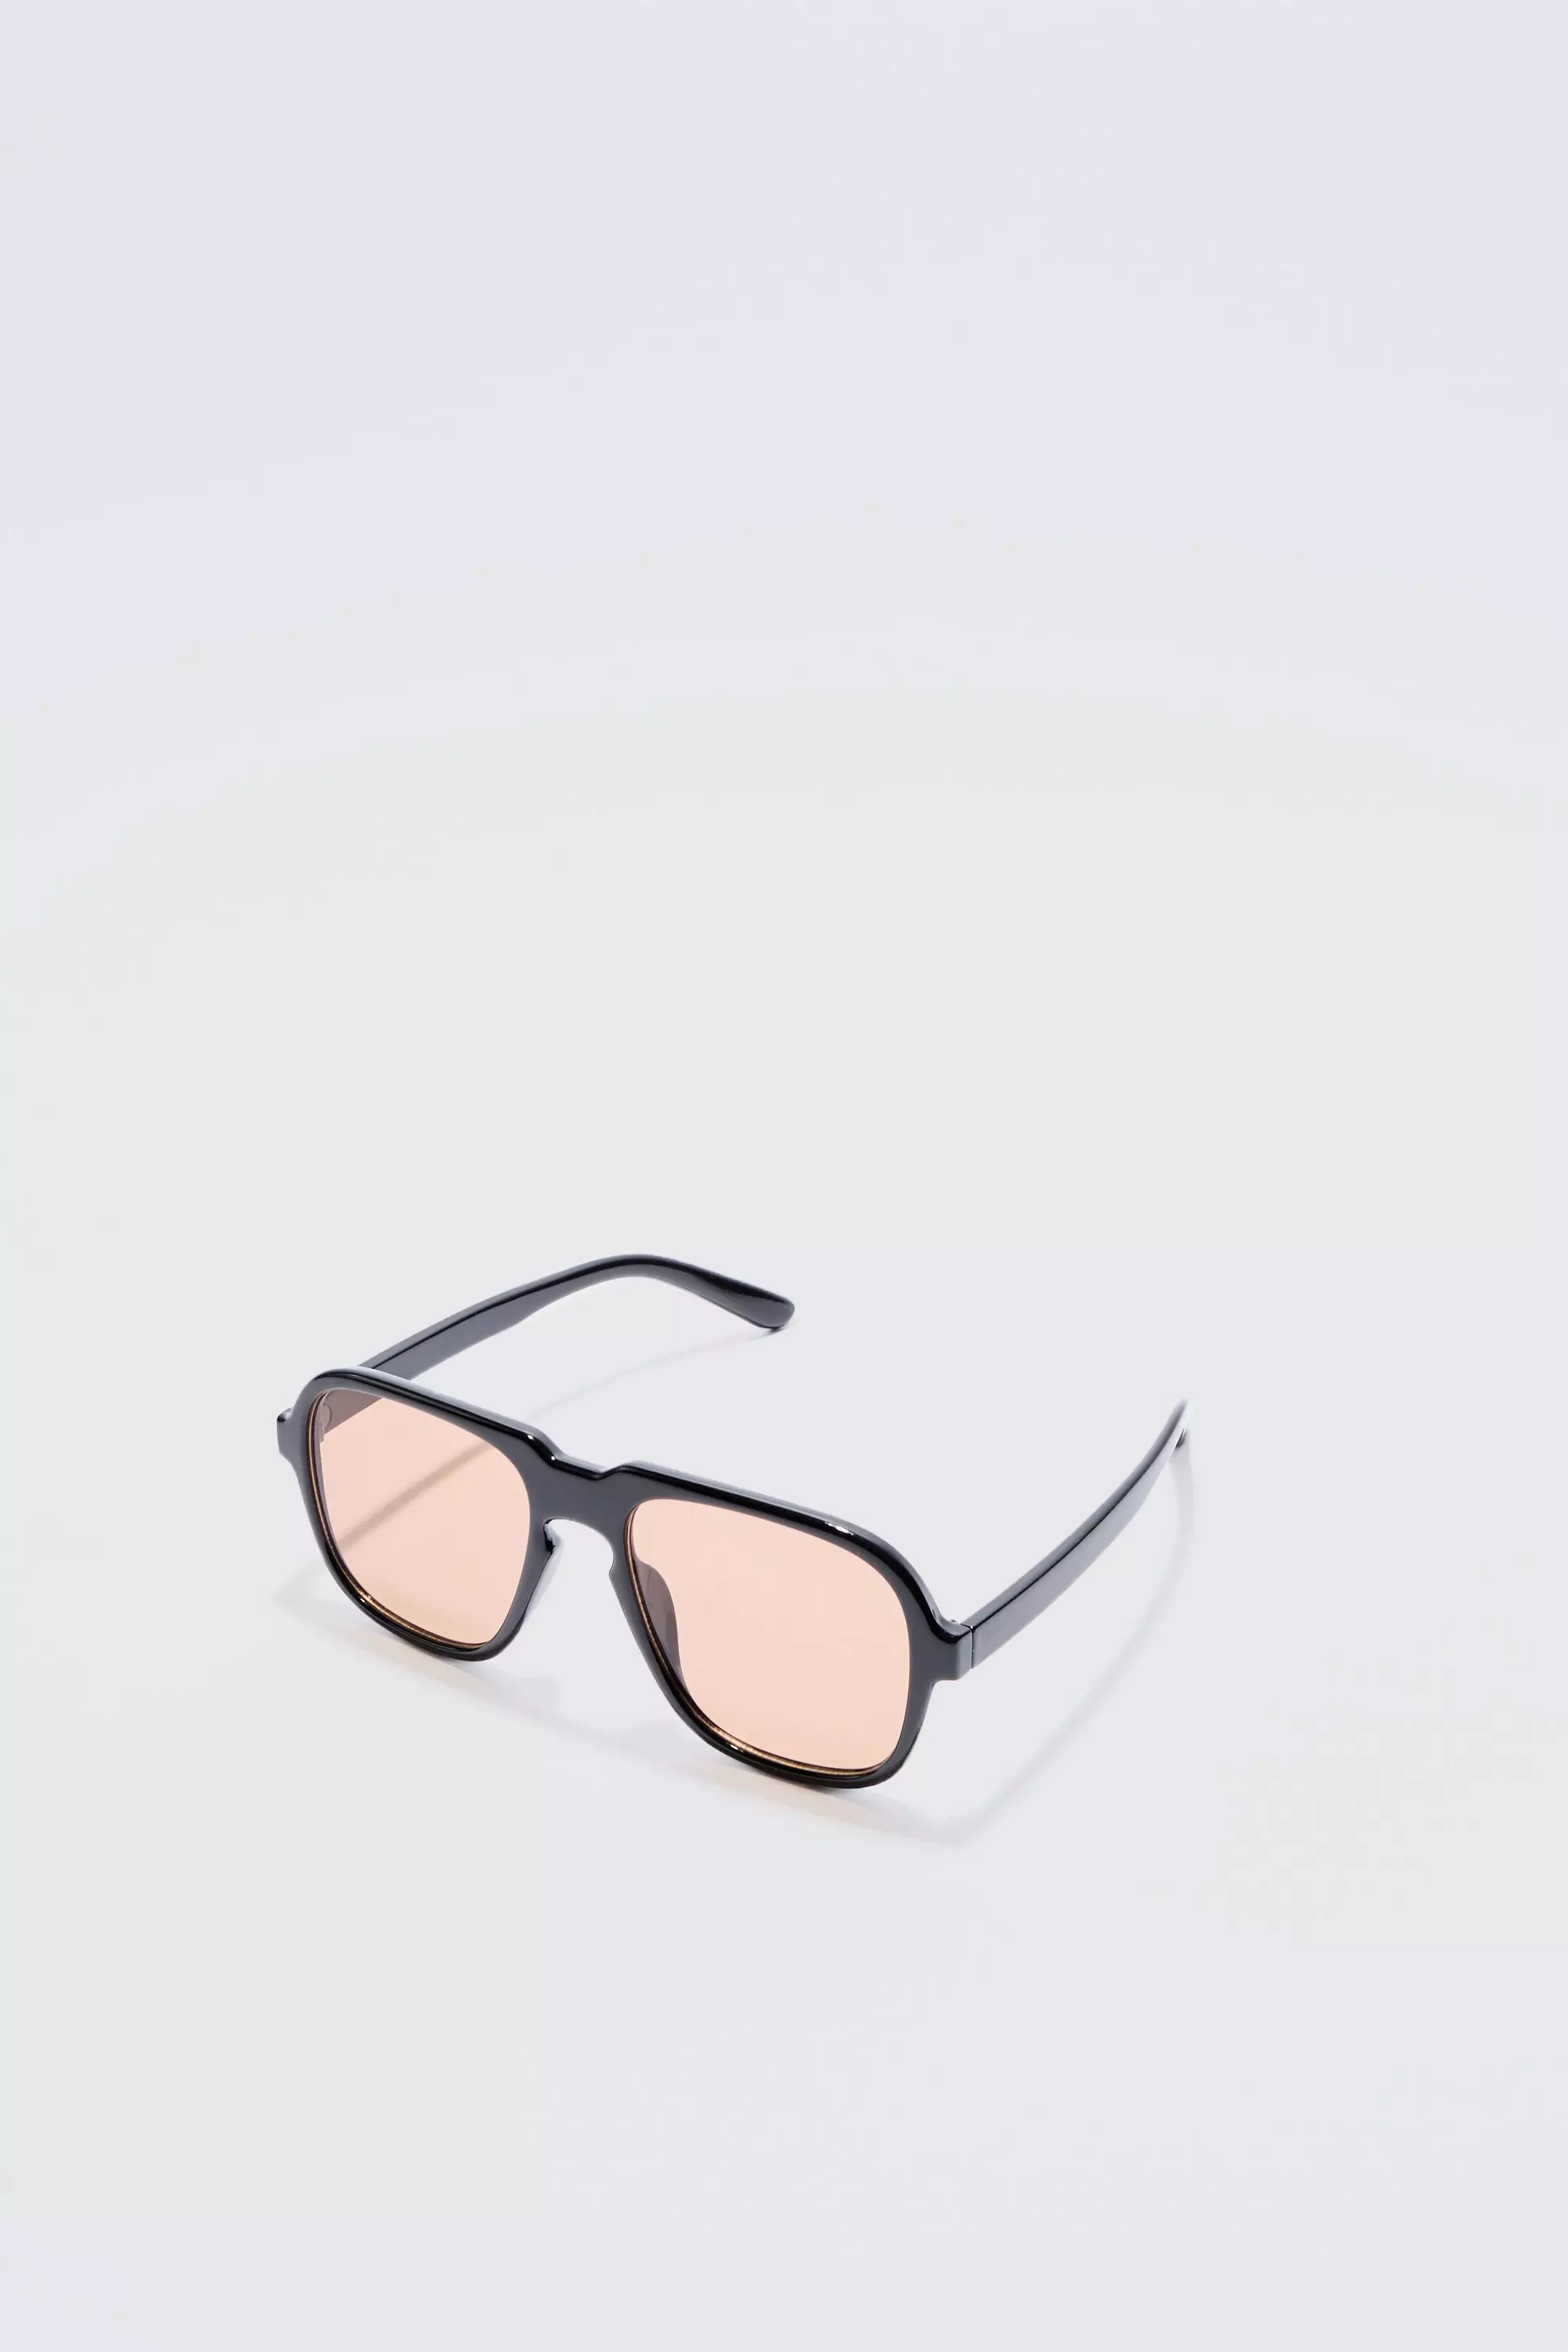 Retro High Brow Sunglasses With Brown Lens Black